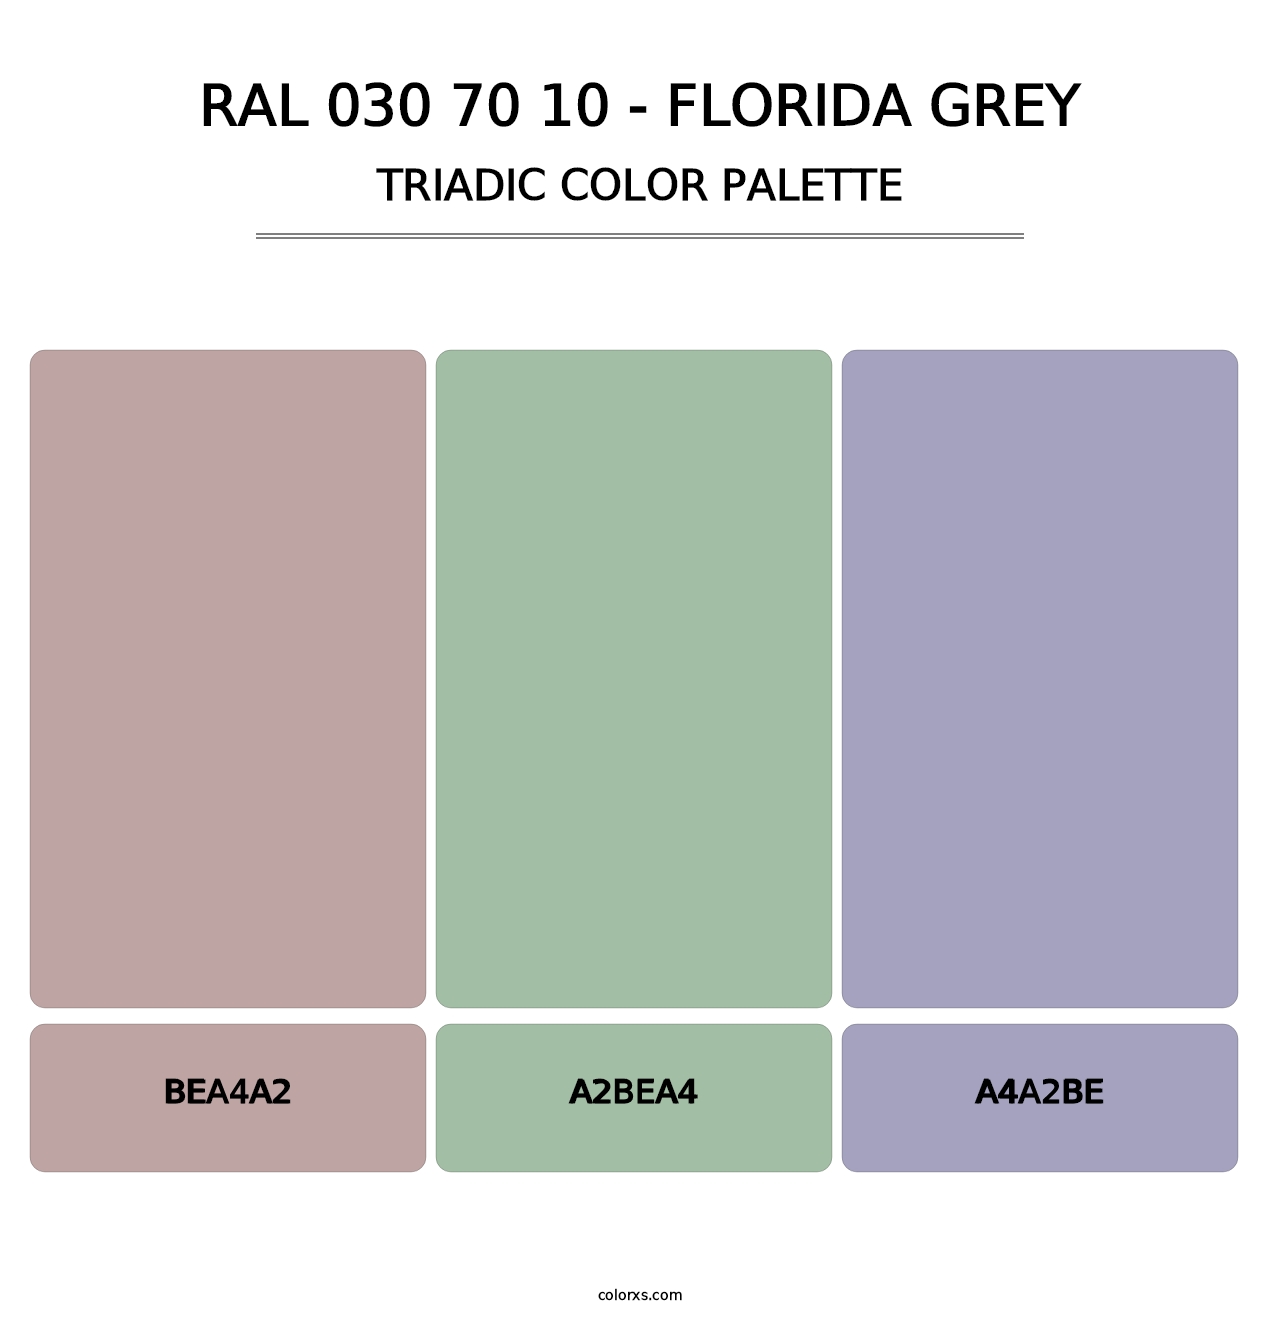 RAL 030 70 10 - Florida Grey - Triadic Color Palette